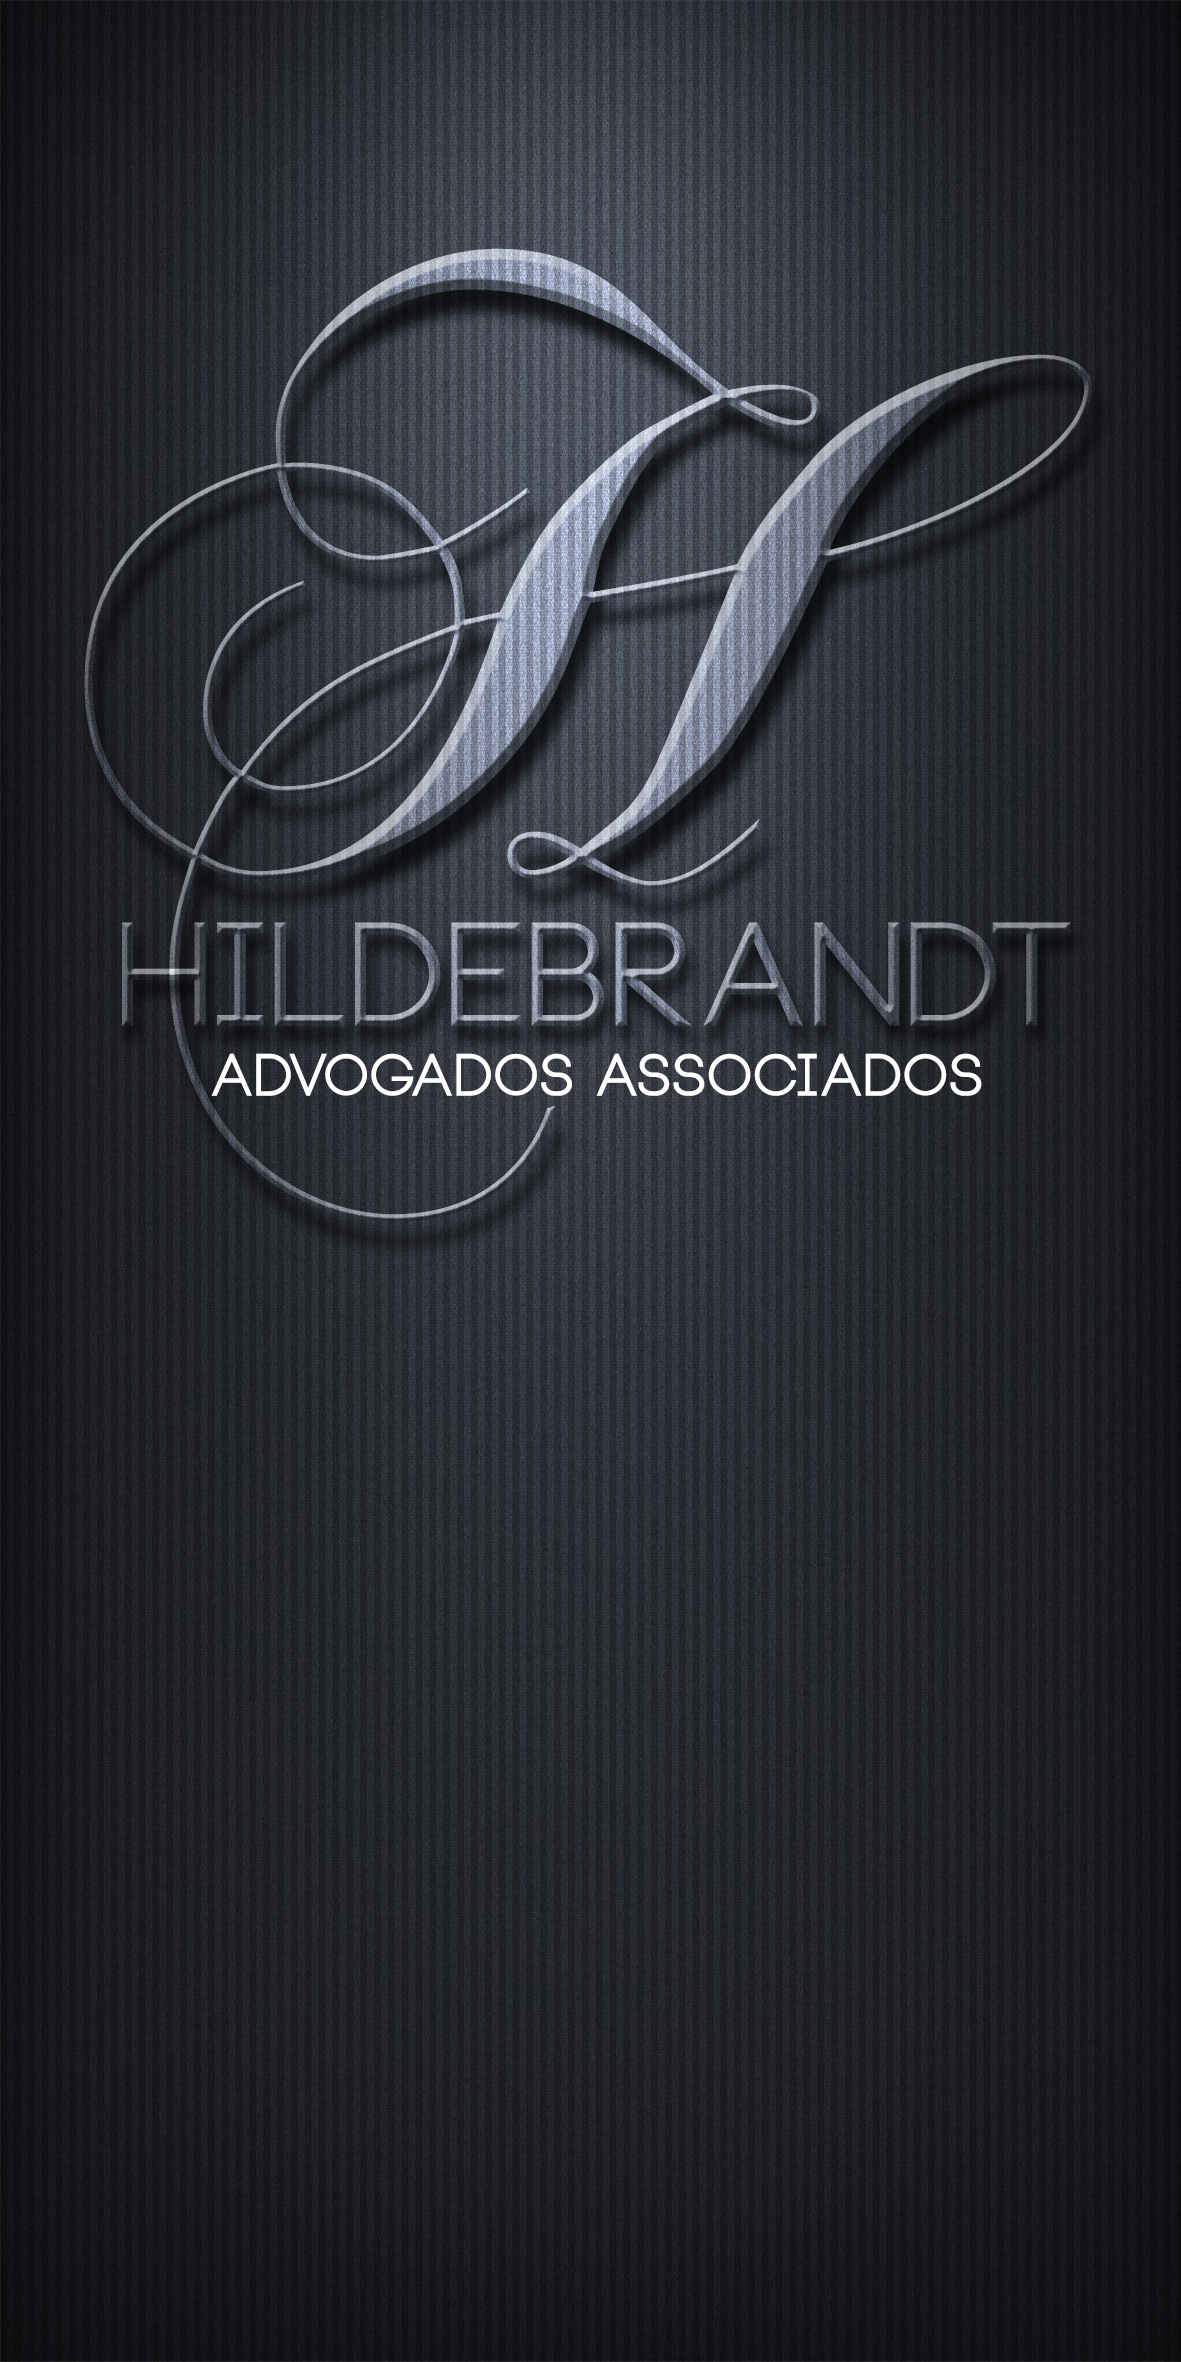 Hildebrandt advogados associados Logotipo